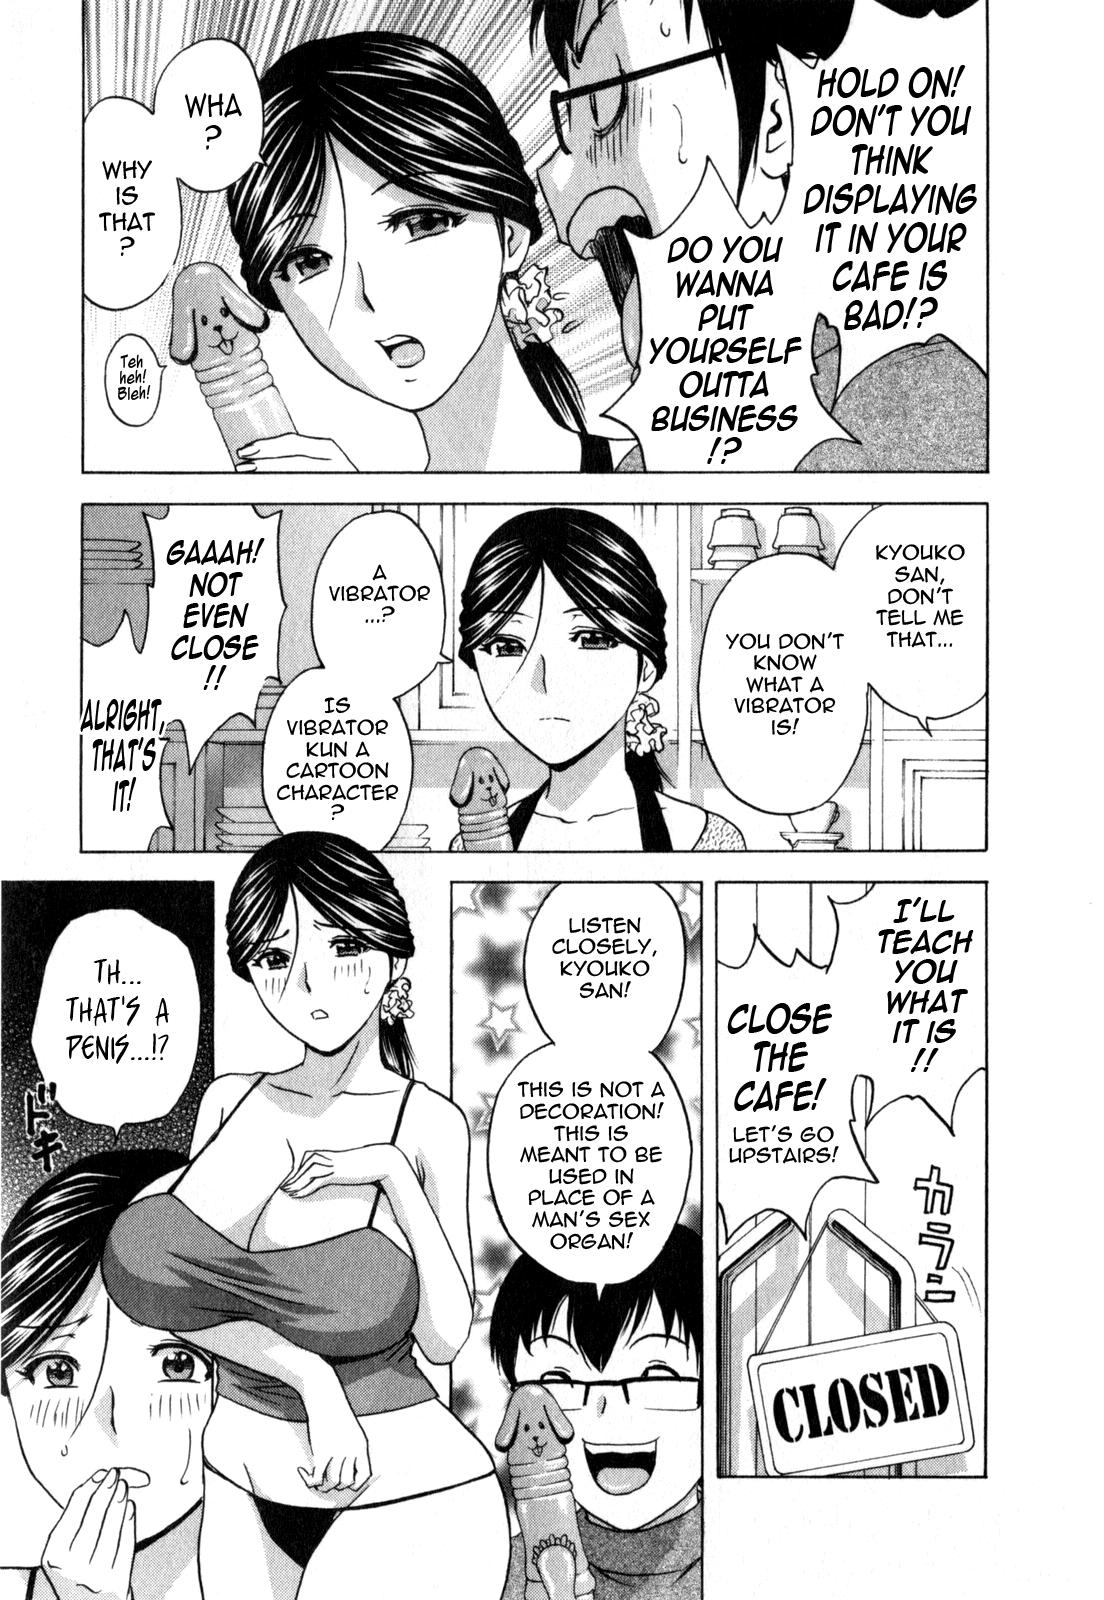 [Hidemaru] Life with Married Women Just Like a Manga 3 - Ch. 1-8 [English] {Tadanohito} 16